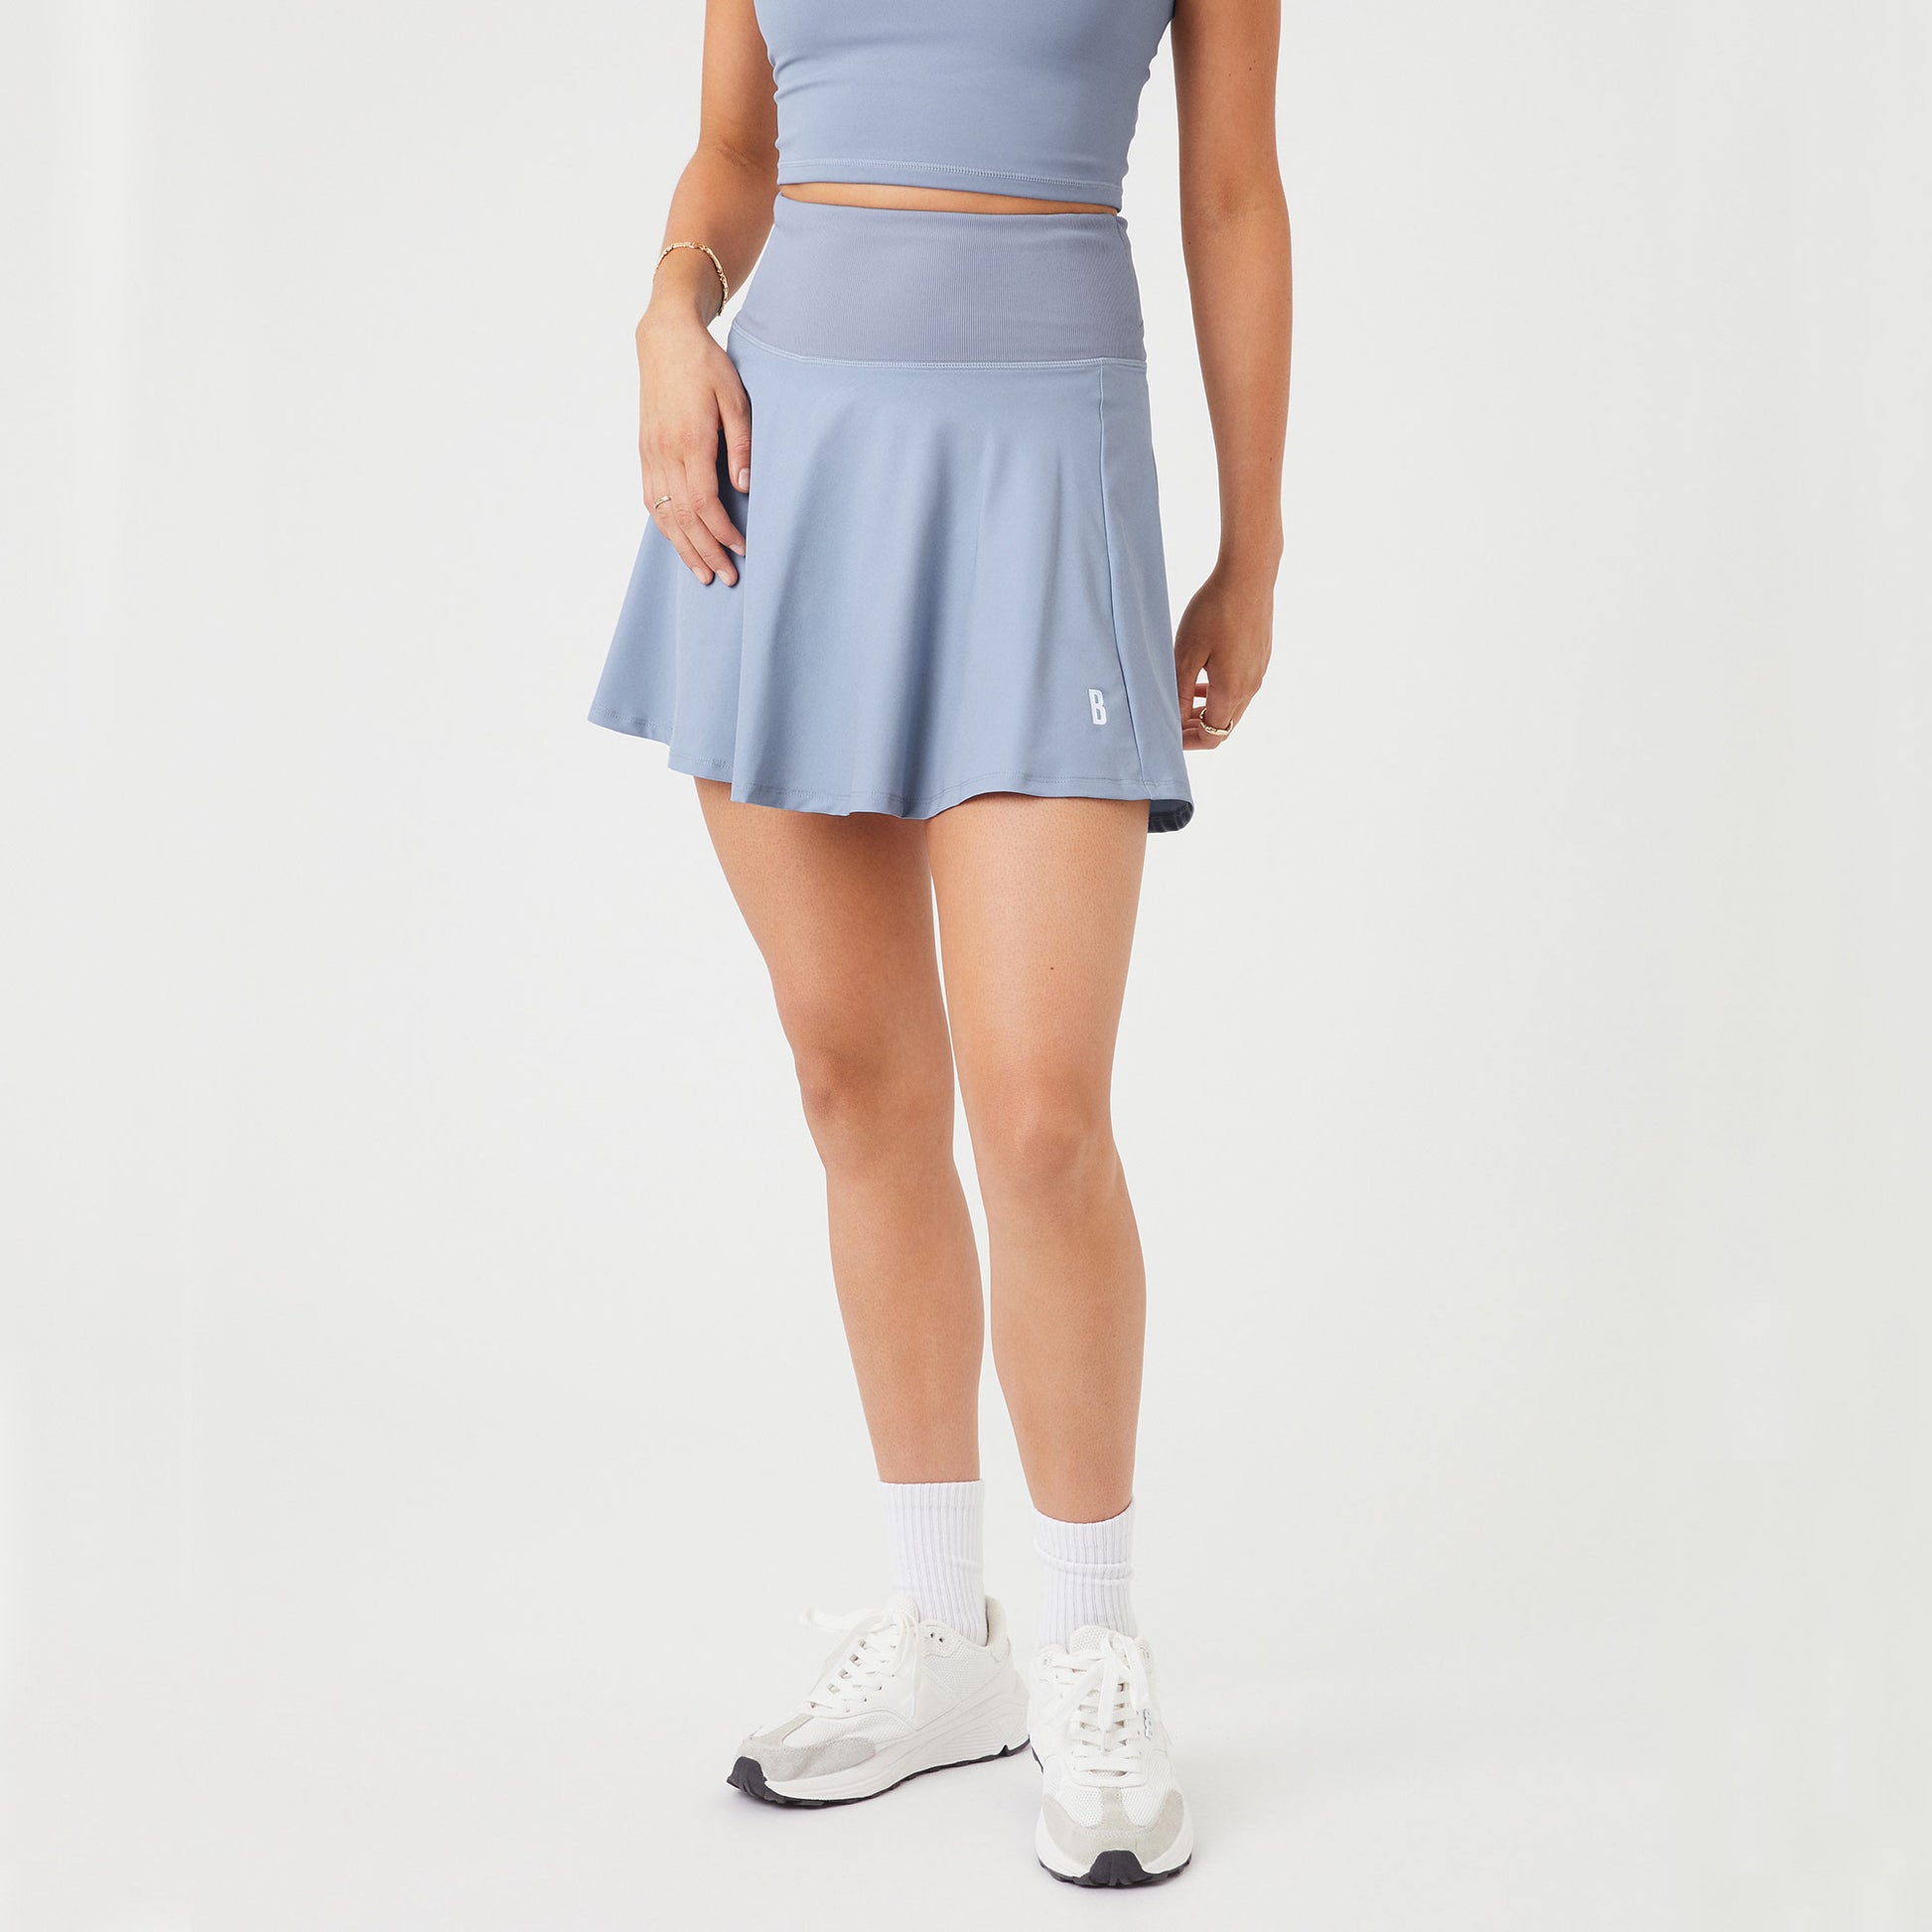 Björn Borg Ace Women's Rib Pocket Tennis Skirt Blue (1)